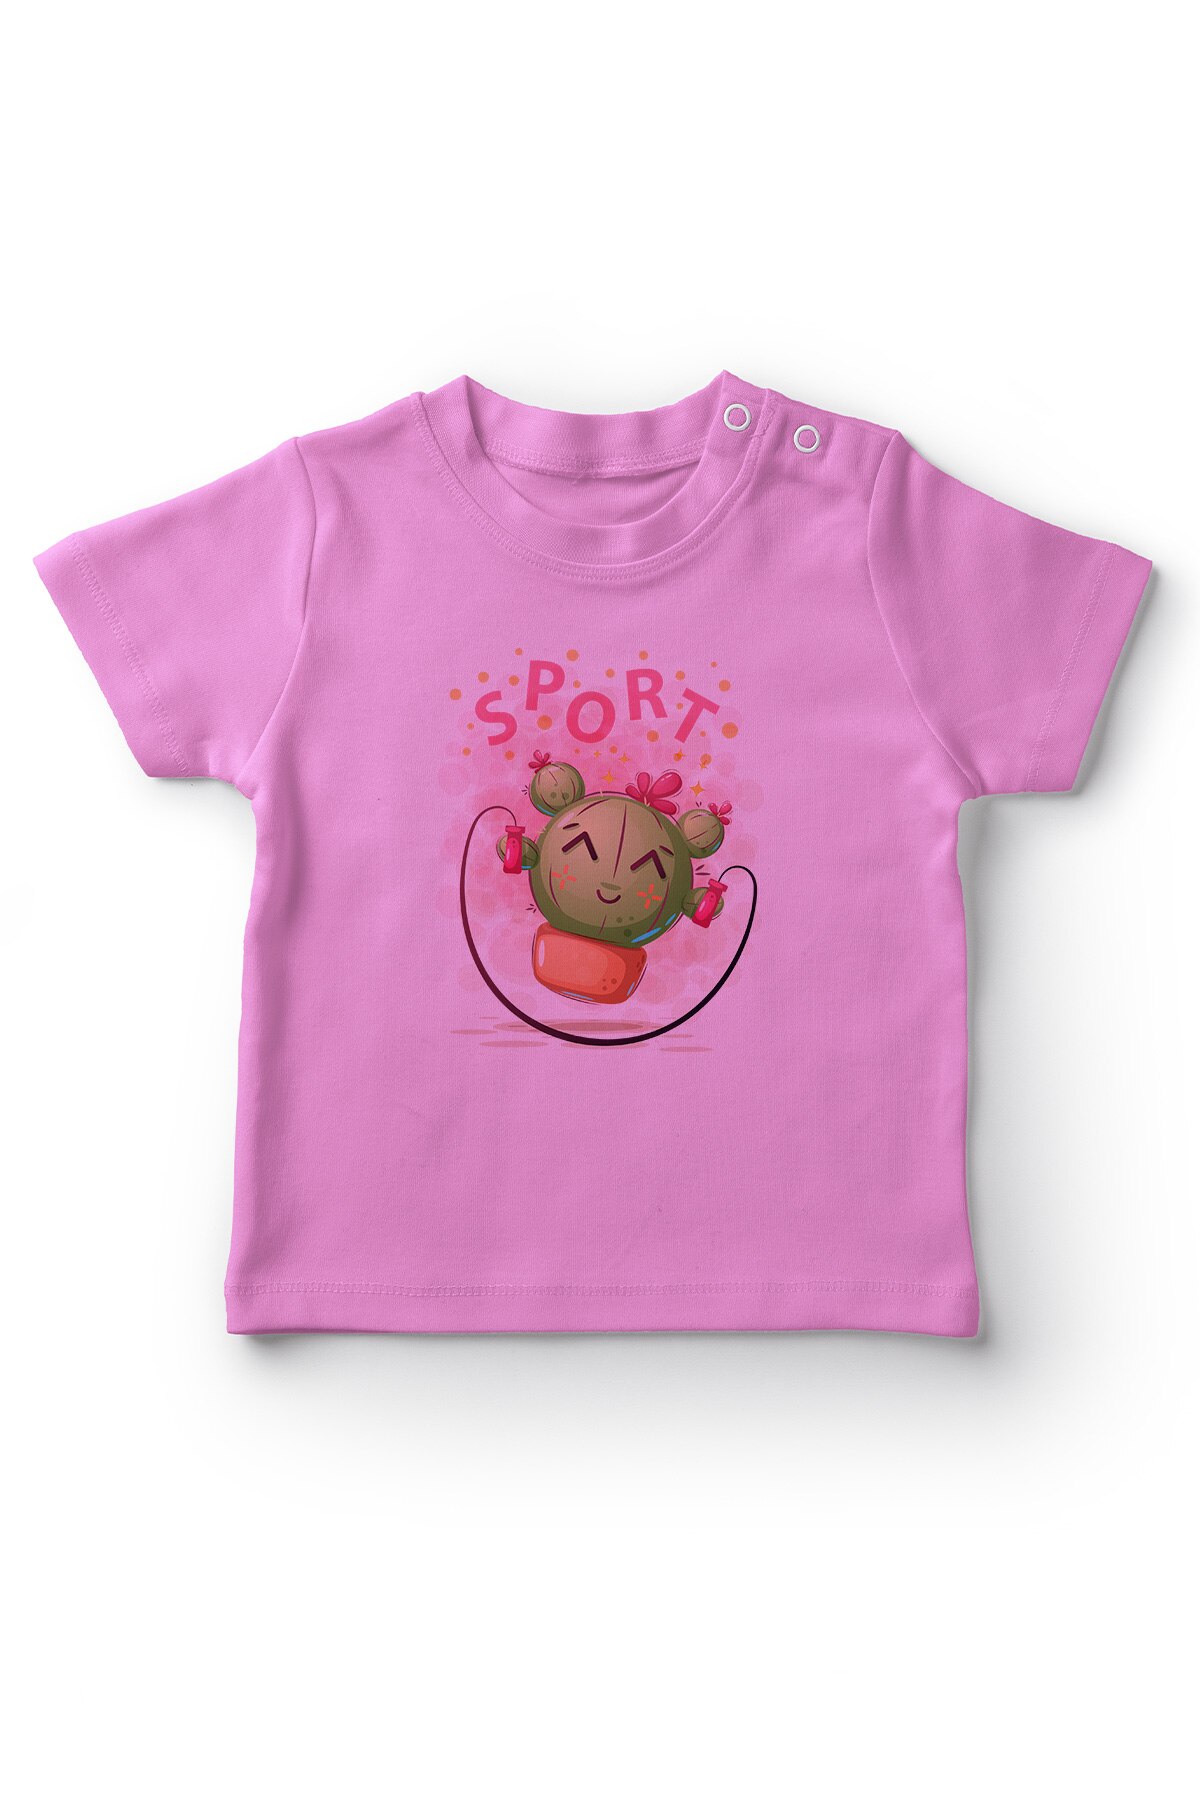 Angemiel Baby In Sport Cactus Meisje Baby T-shirt Roze